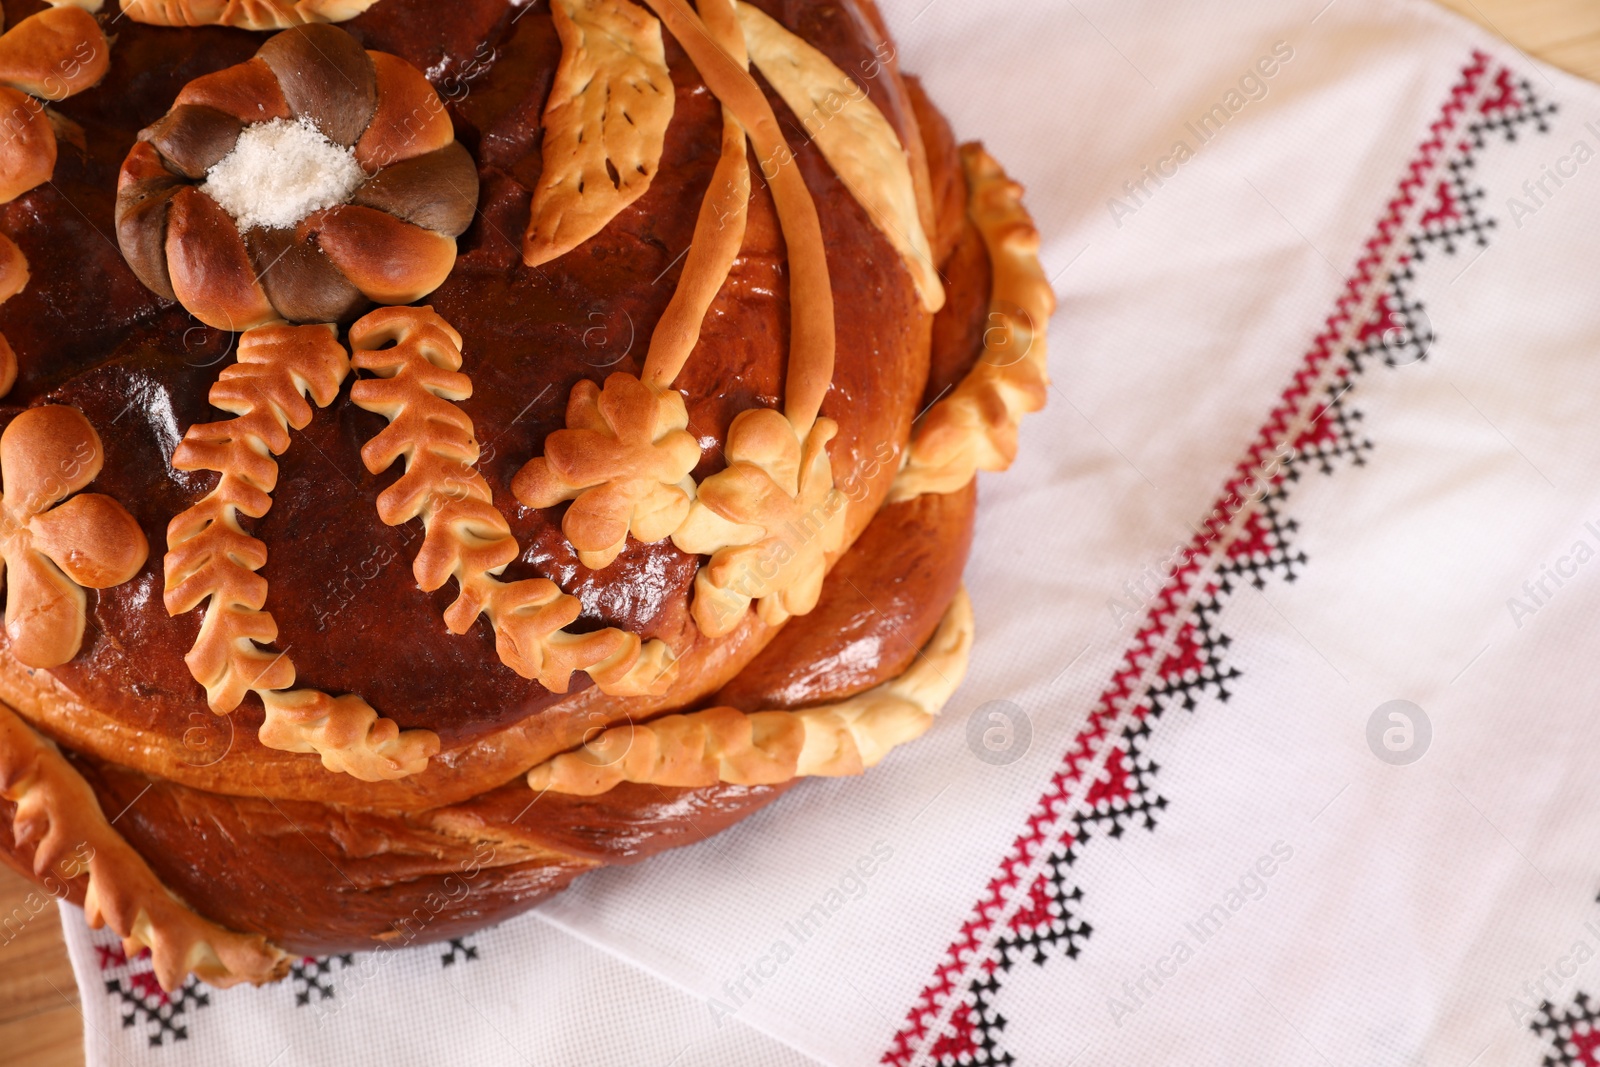 Photo of Korovai on rushnyk, closeup. Ukrainian bread and salt welcoming tradition